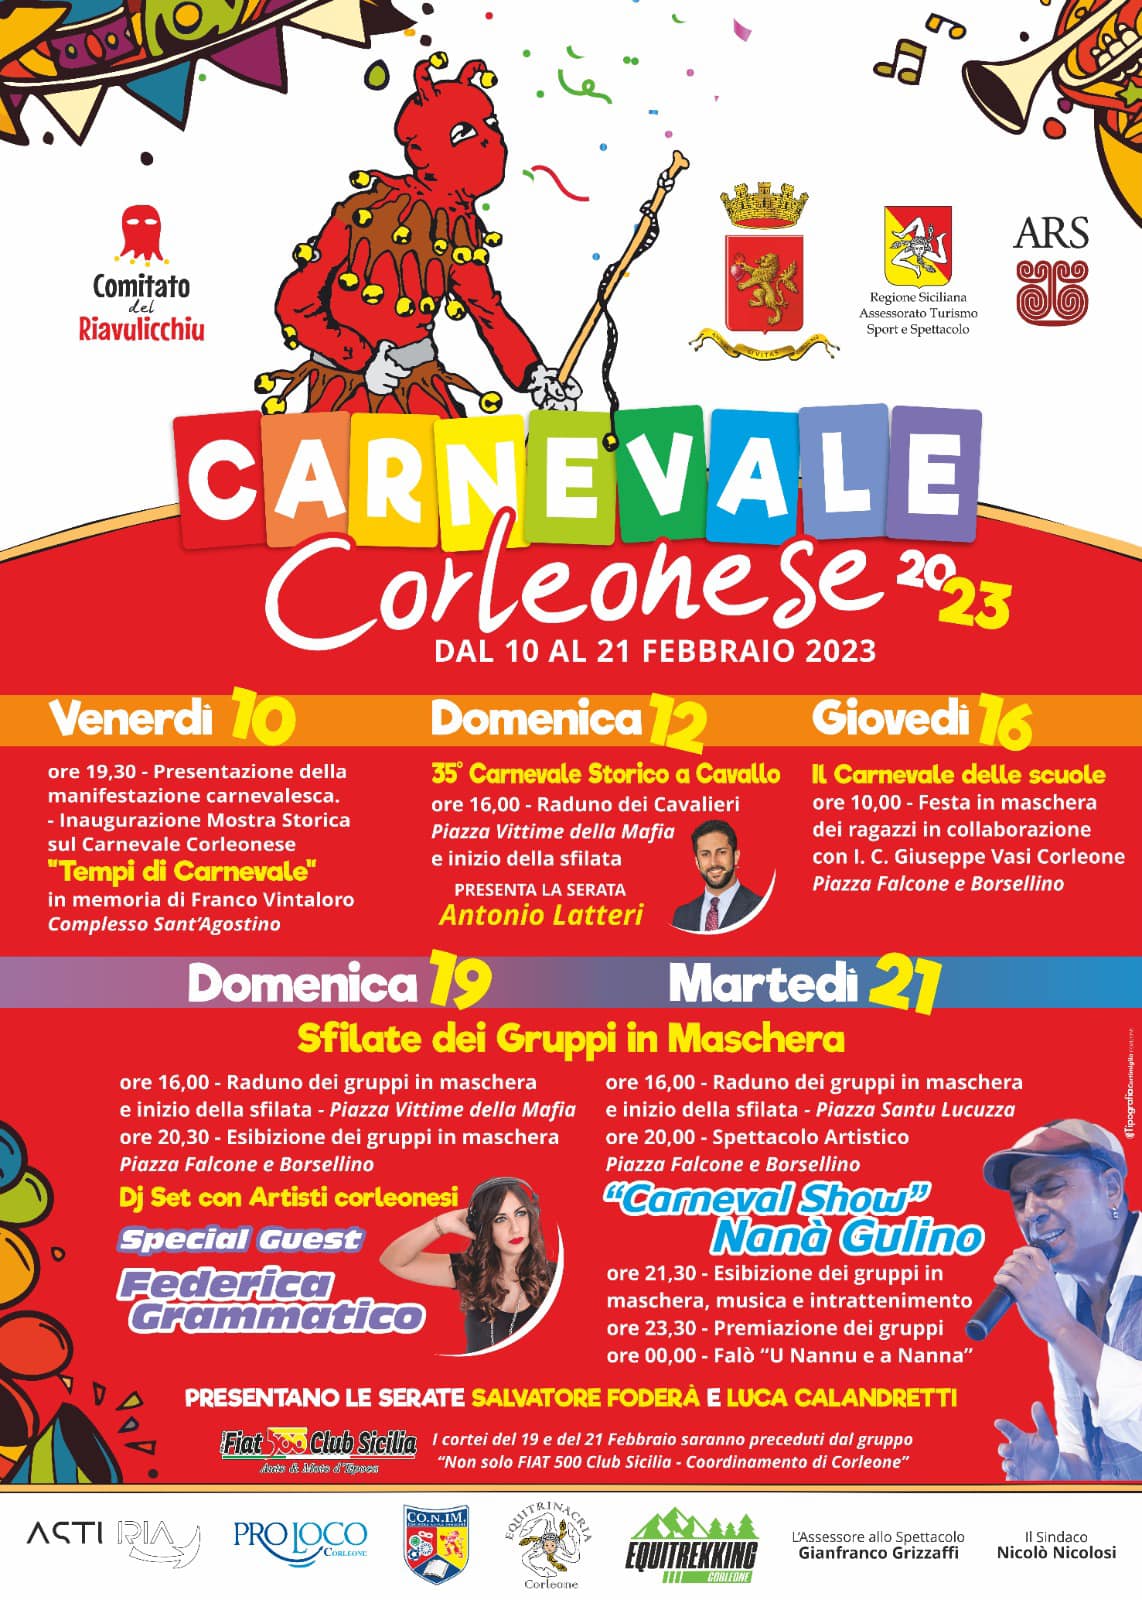 Carnevale Corleonese 2023